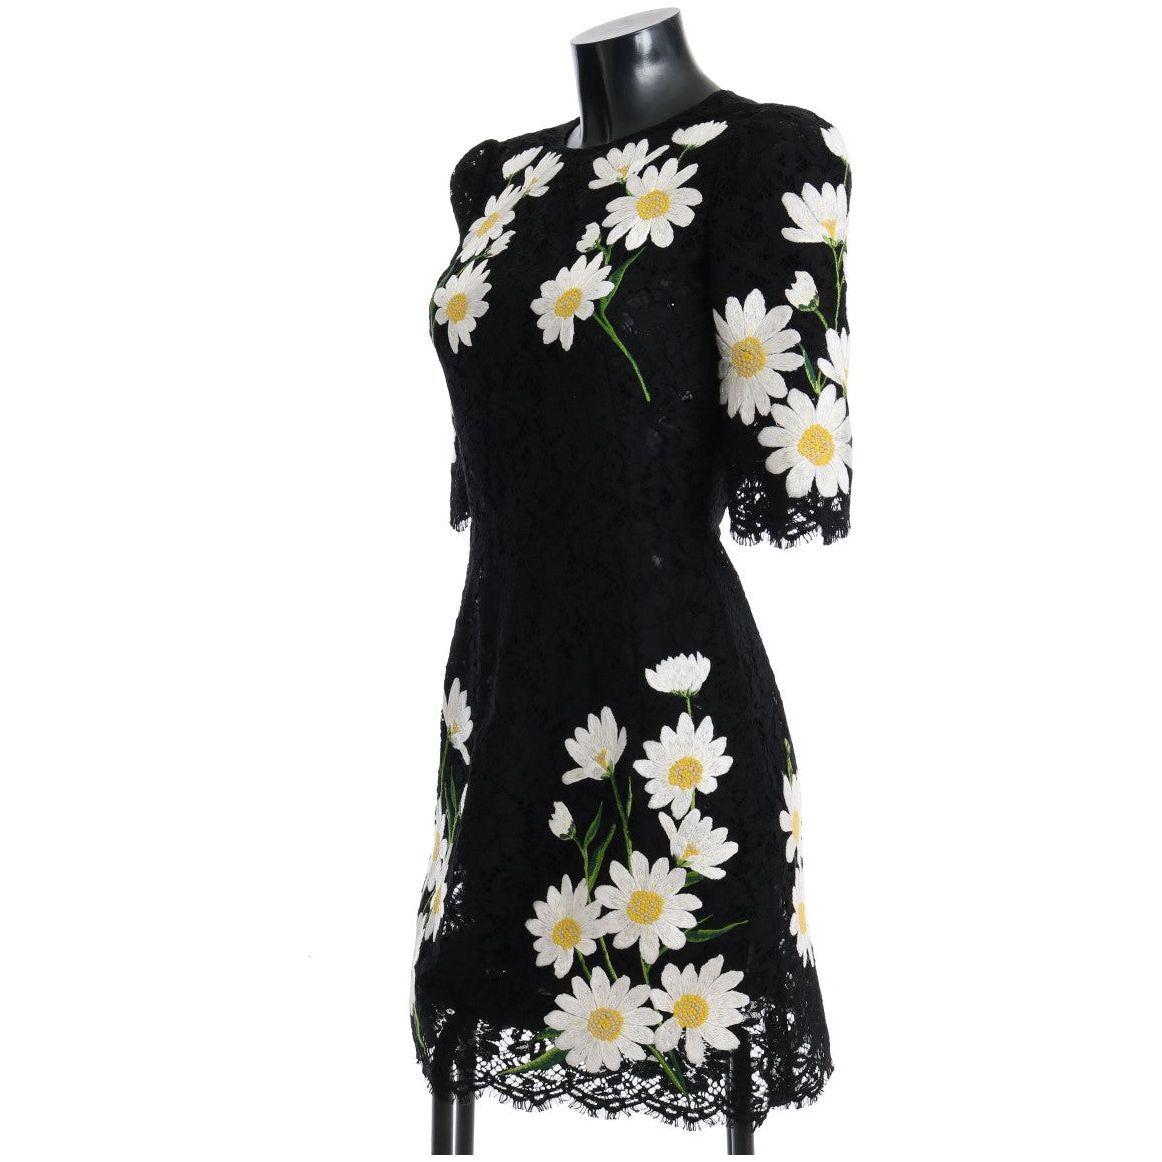 Dolce & Gabbana Black Floral Lace Chamomile Embroidered Dress black-floral-lace-chamomile-sicily-dress 450625-black-floral-lace-chamomile-sicily-dress-1.jpg